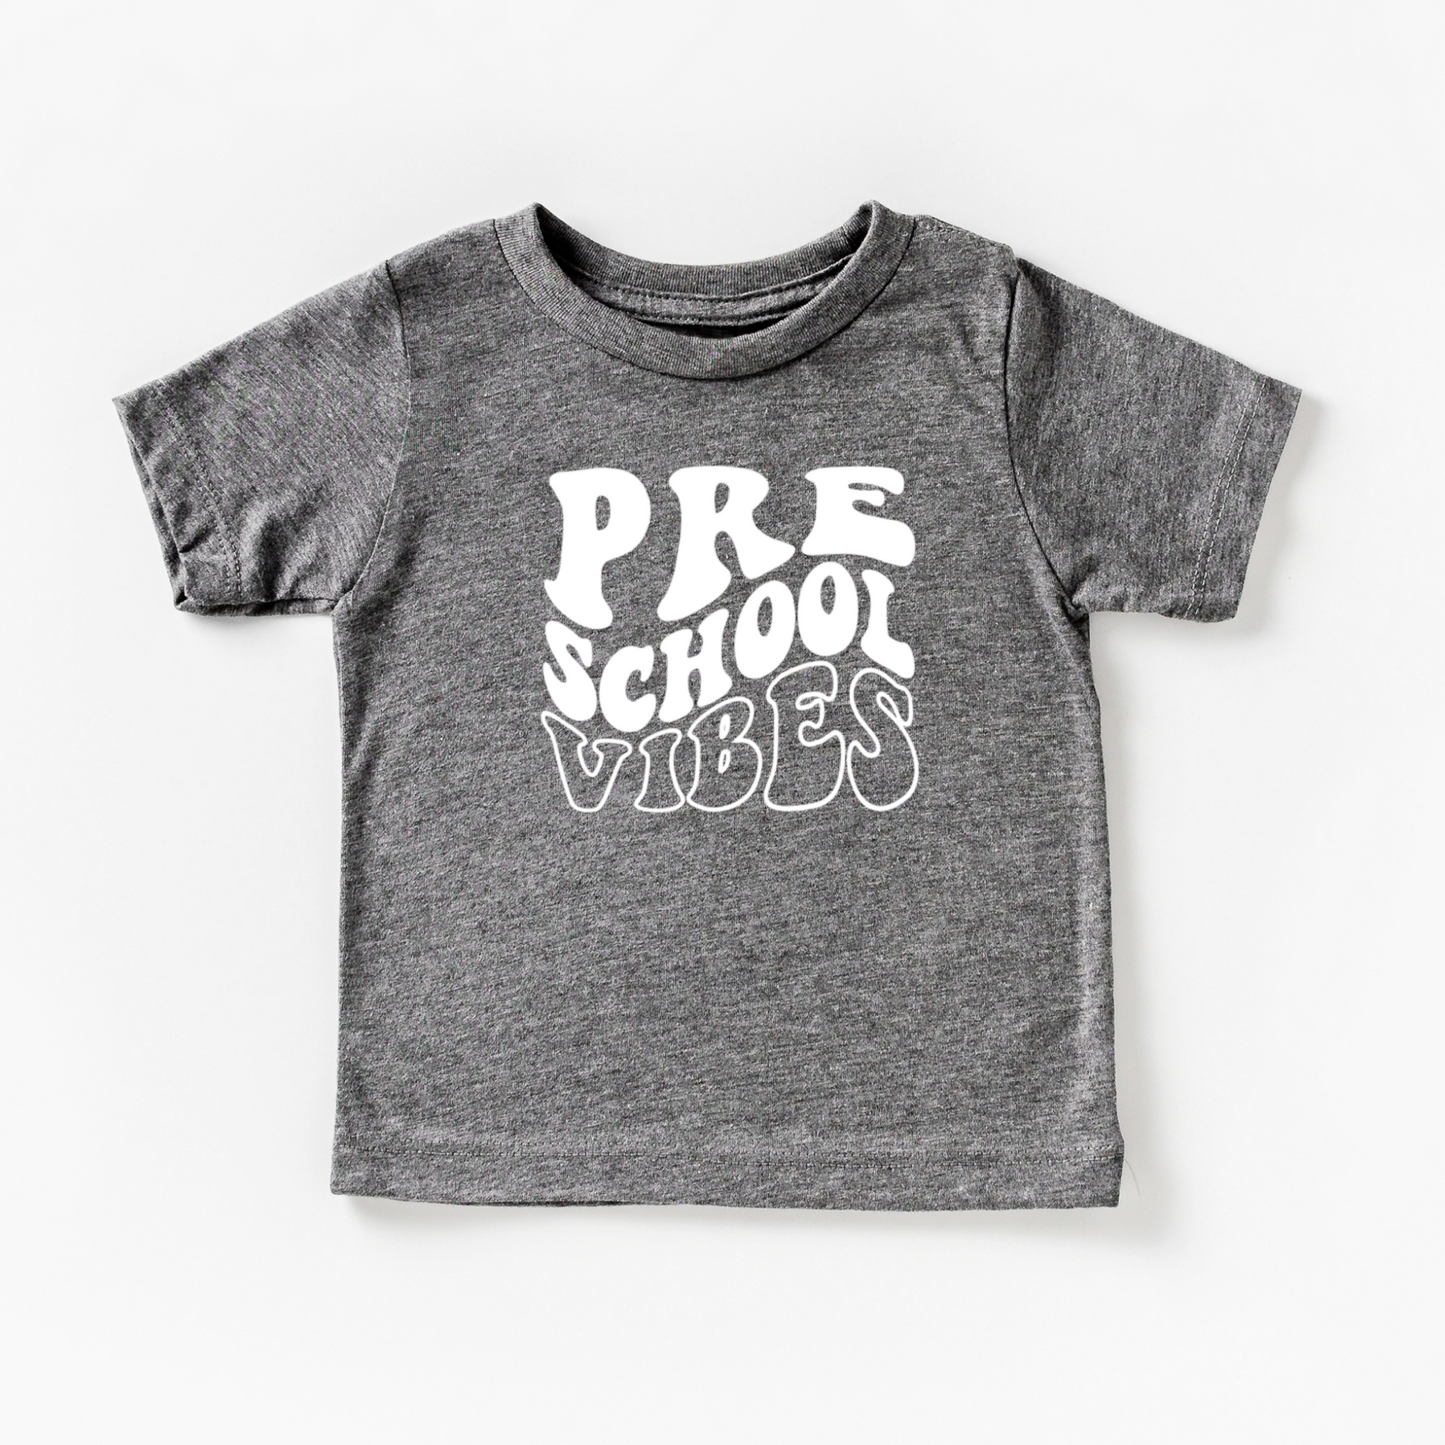 Preschool Vibes | Short Sleeve Youth Tee